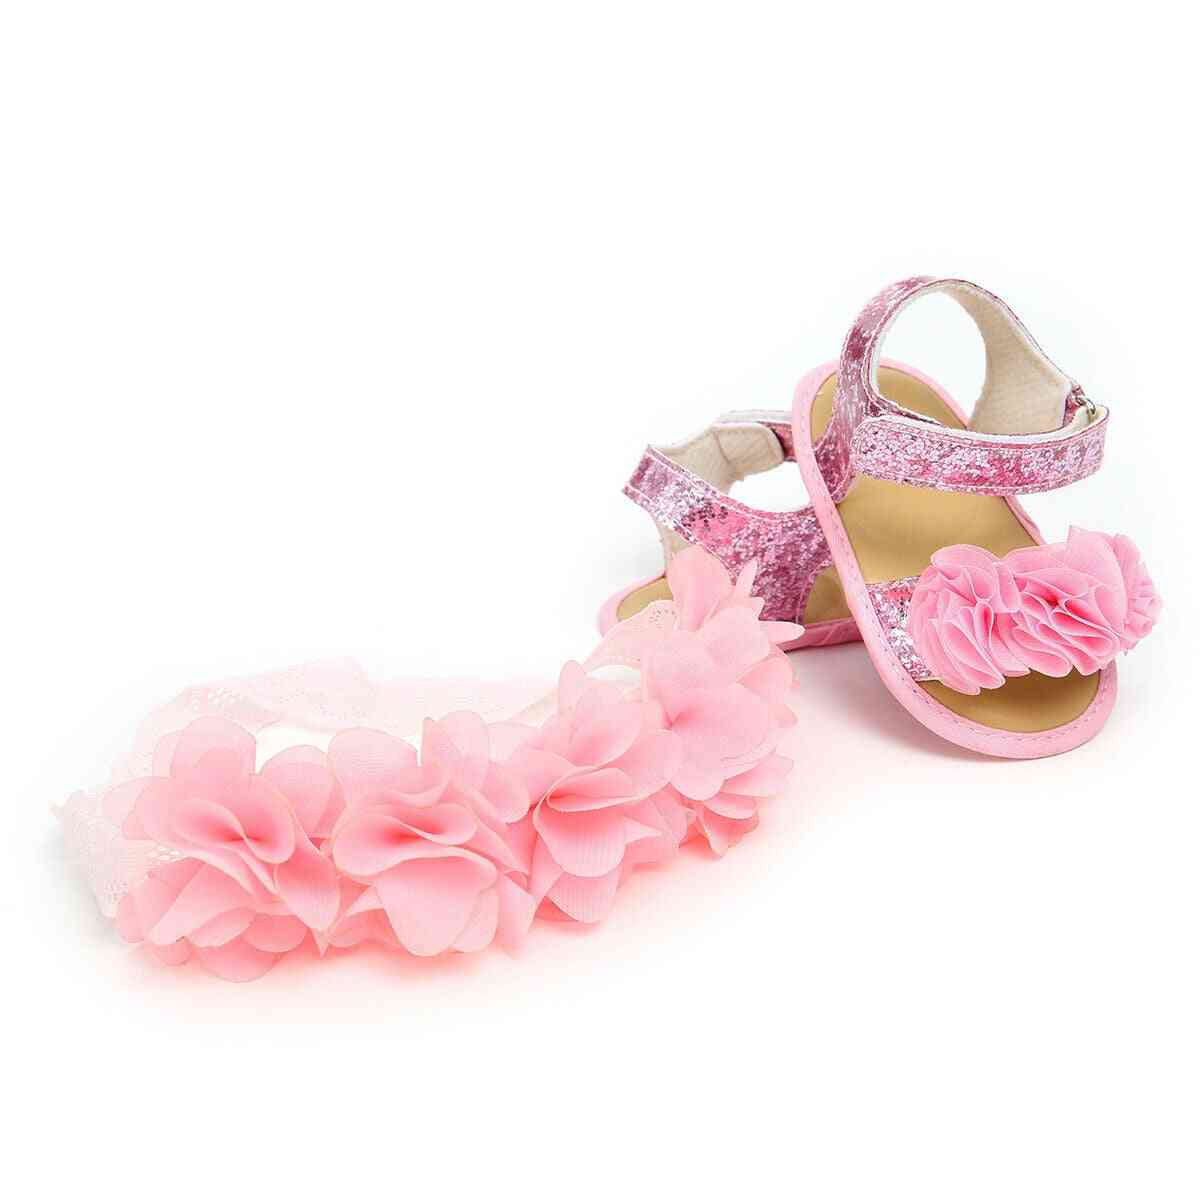 Detské letné oblečenie novorodenec, dievčenské sandále s kvetmi, mäkká podrážka, háčik neformálne + čelenka pevná sada